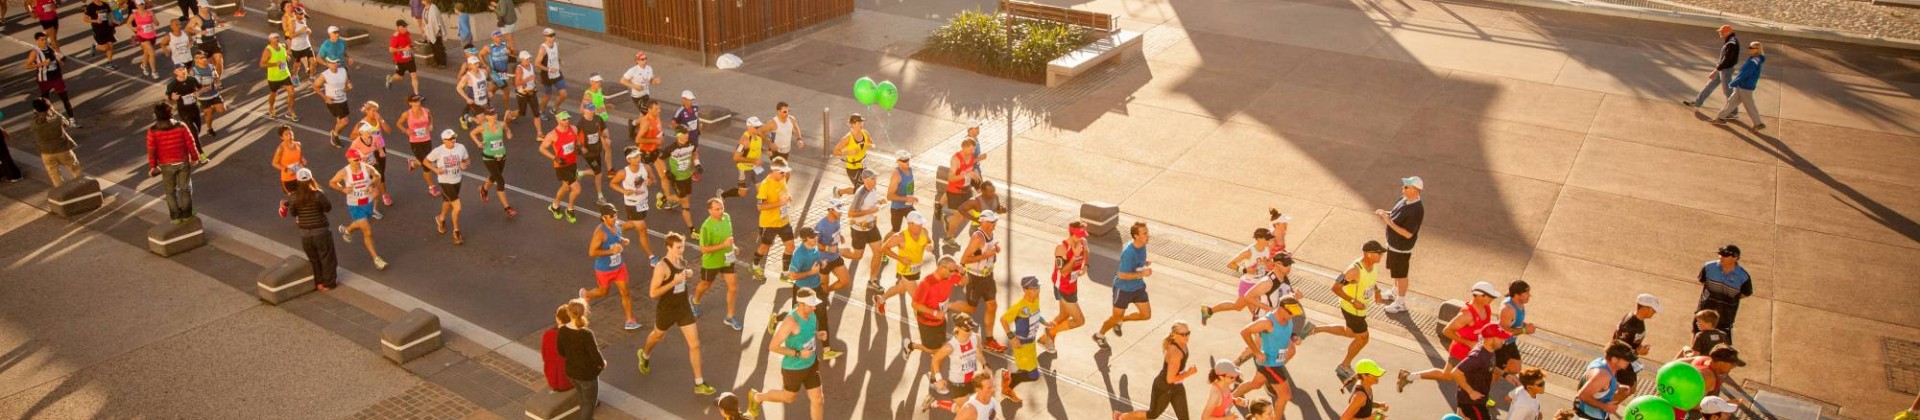 Gold Coast Marathon - 2 to 3 July 2016